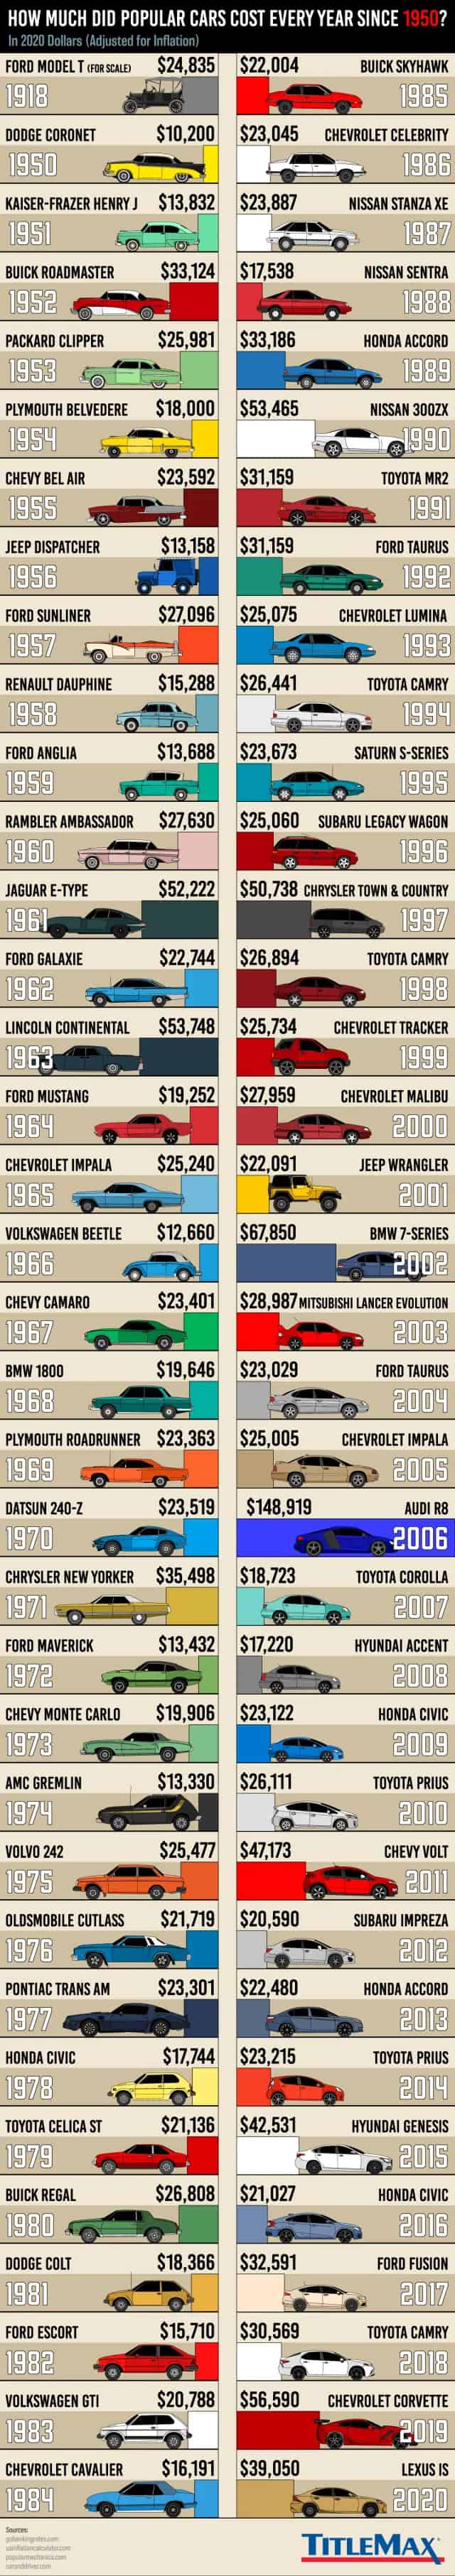 popular-cars-cost-2020-dollars-5